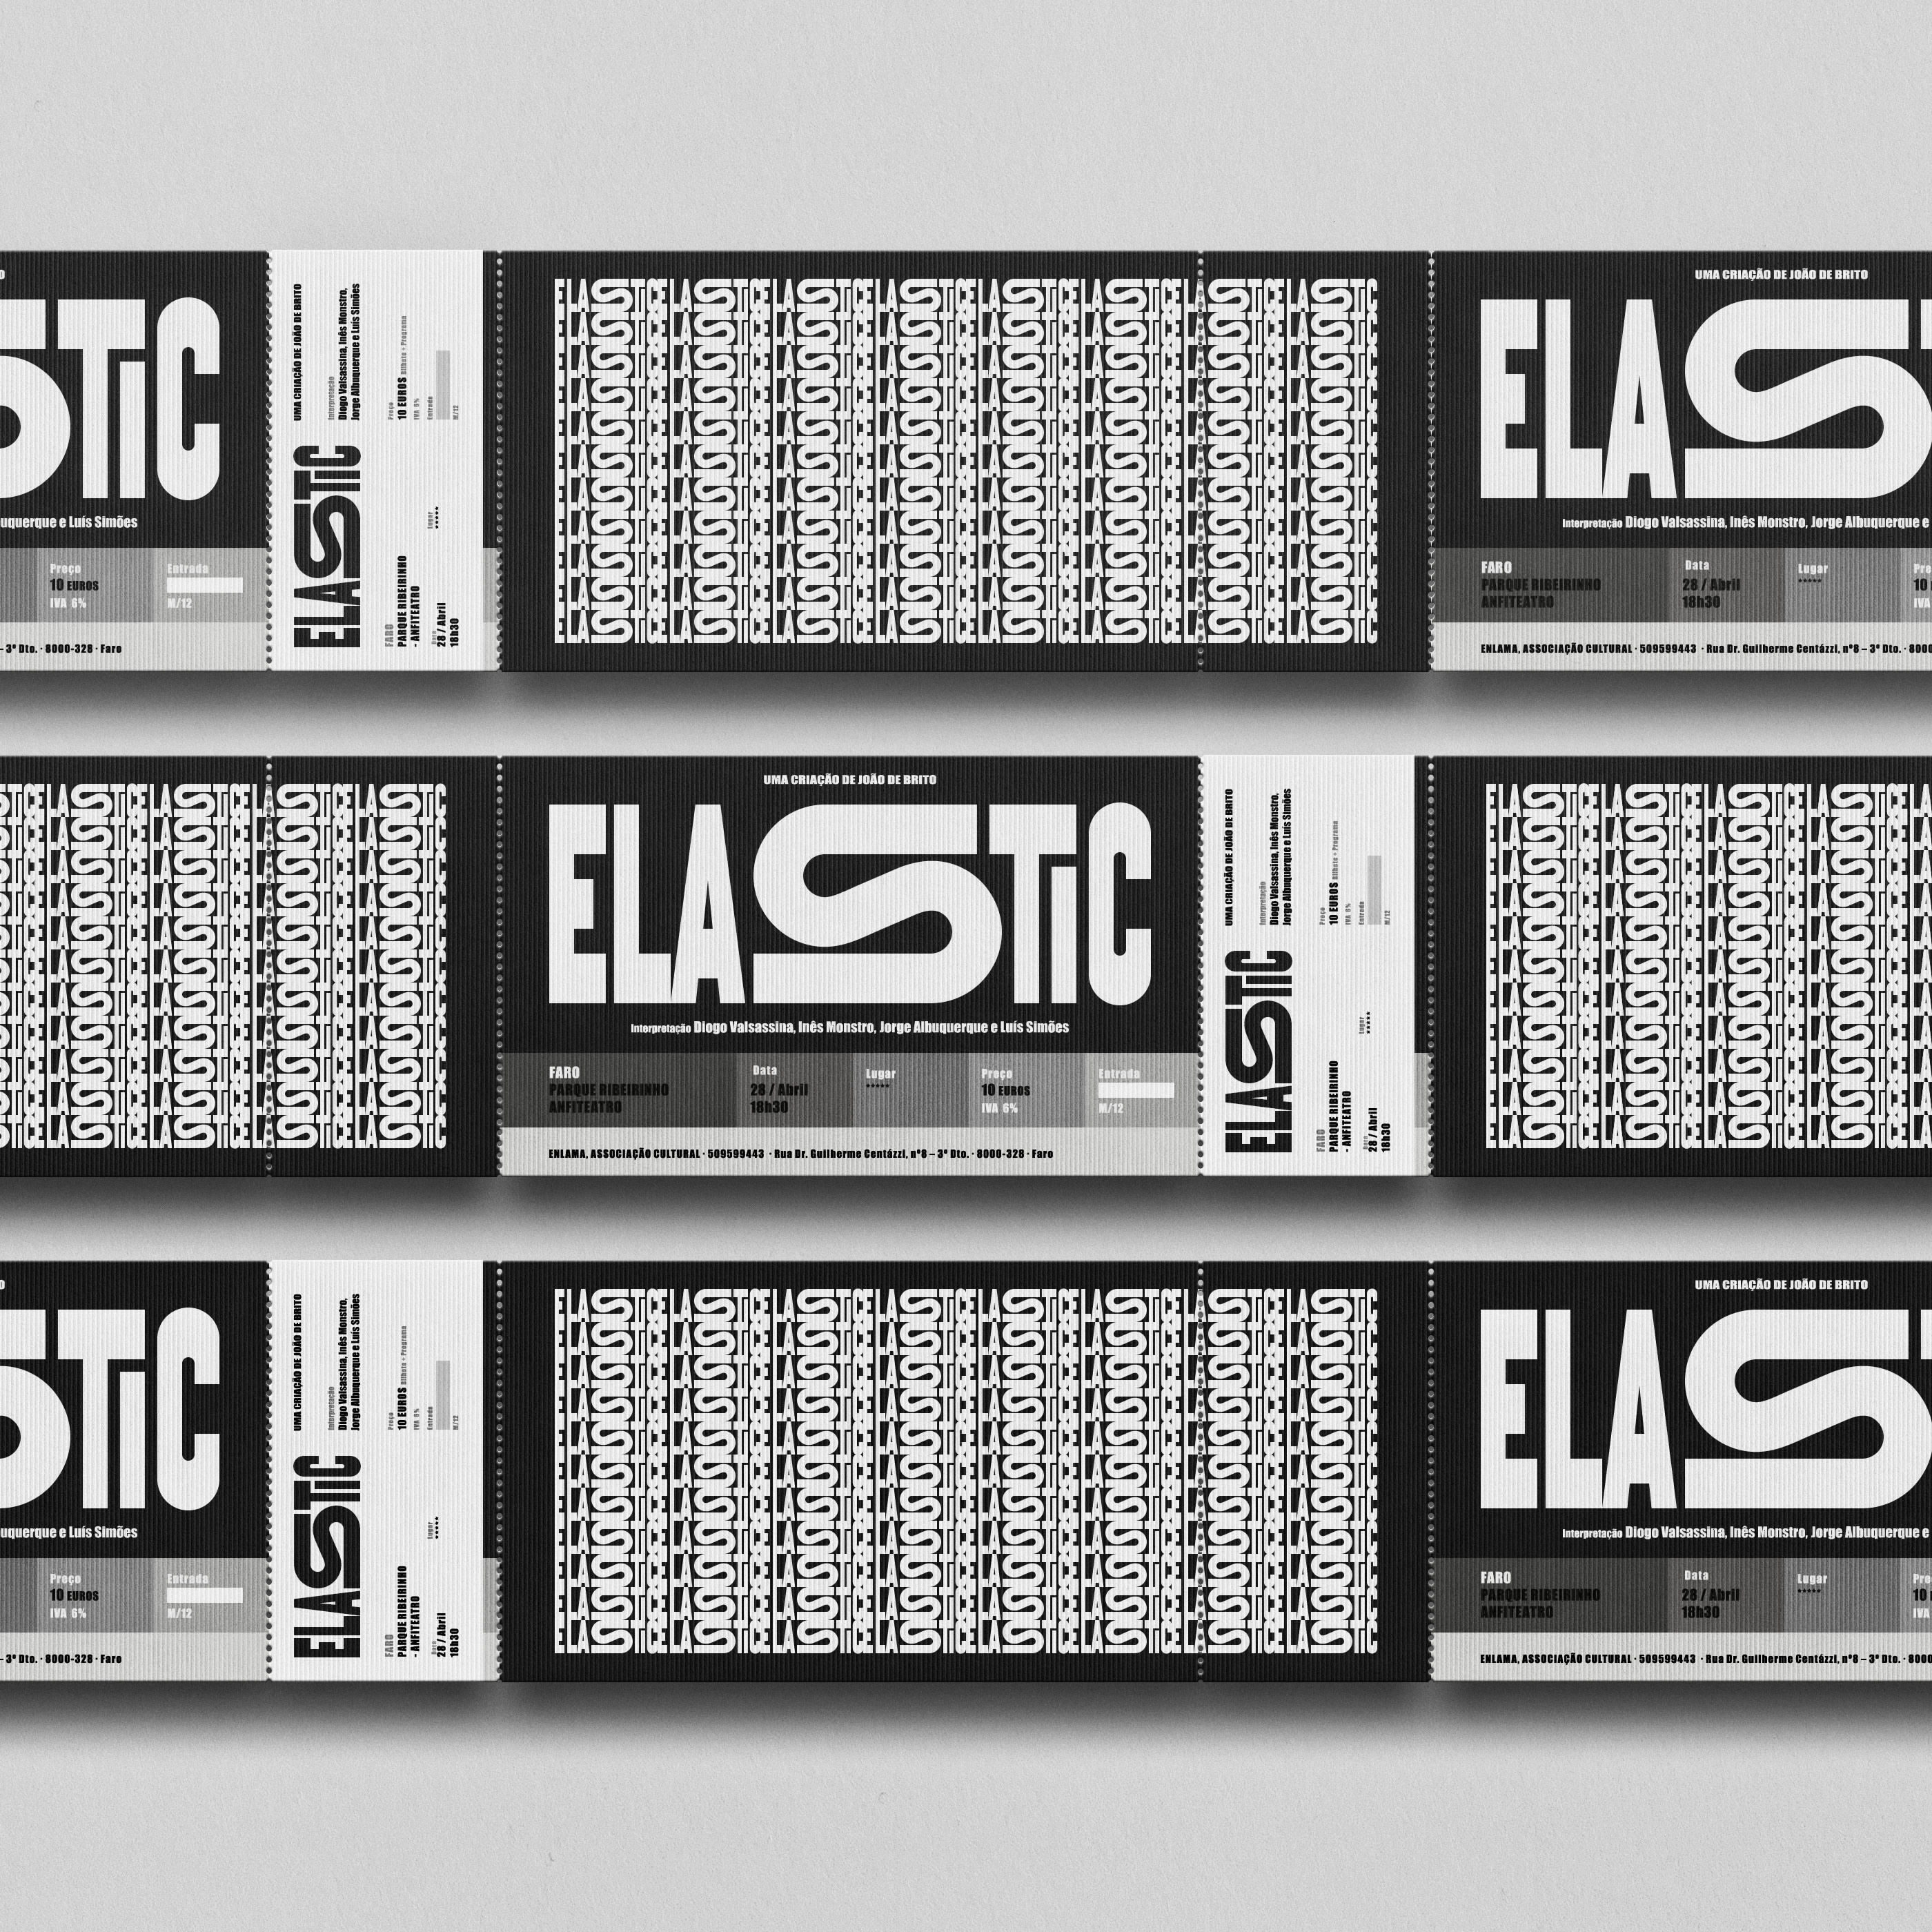 Elastic_031